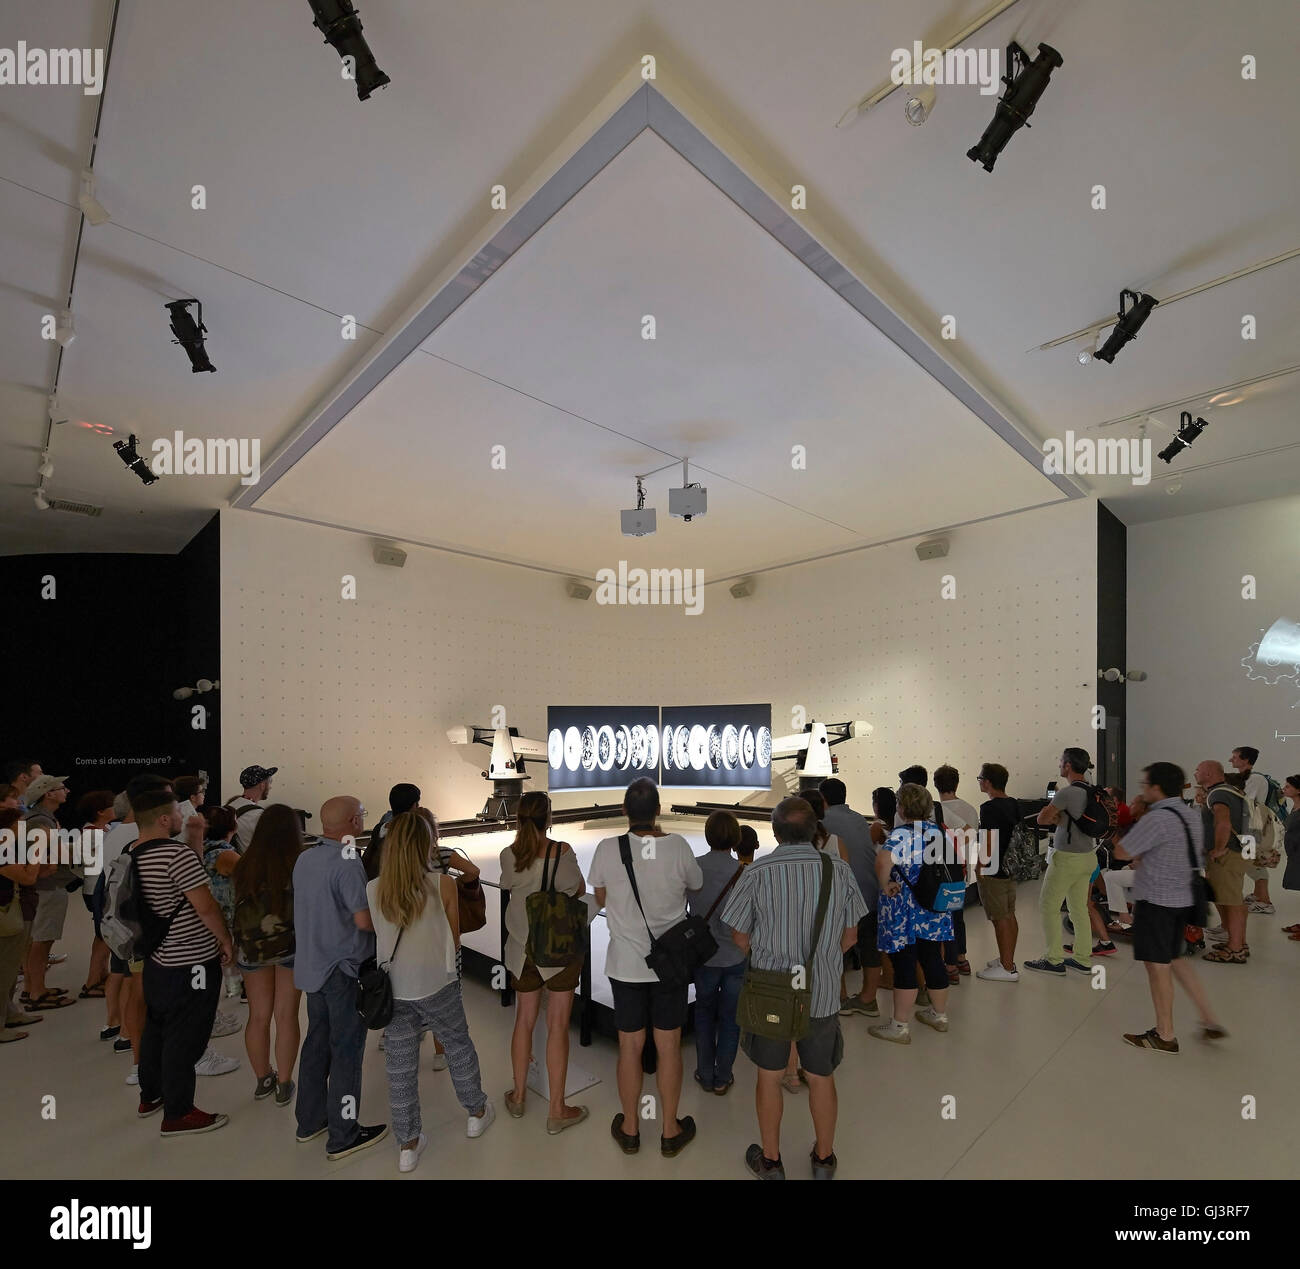 Exhibition hall with presentation platform. Milan EXPO 2015, Korea Pavilion, Milan, Italy. Architect: BCHO Architects, 2015. Stock Photo